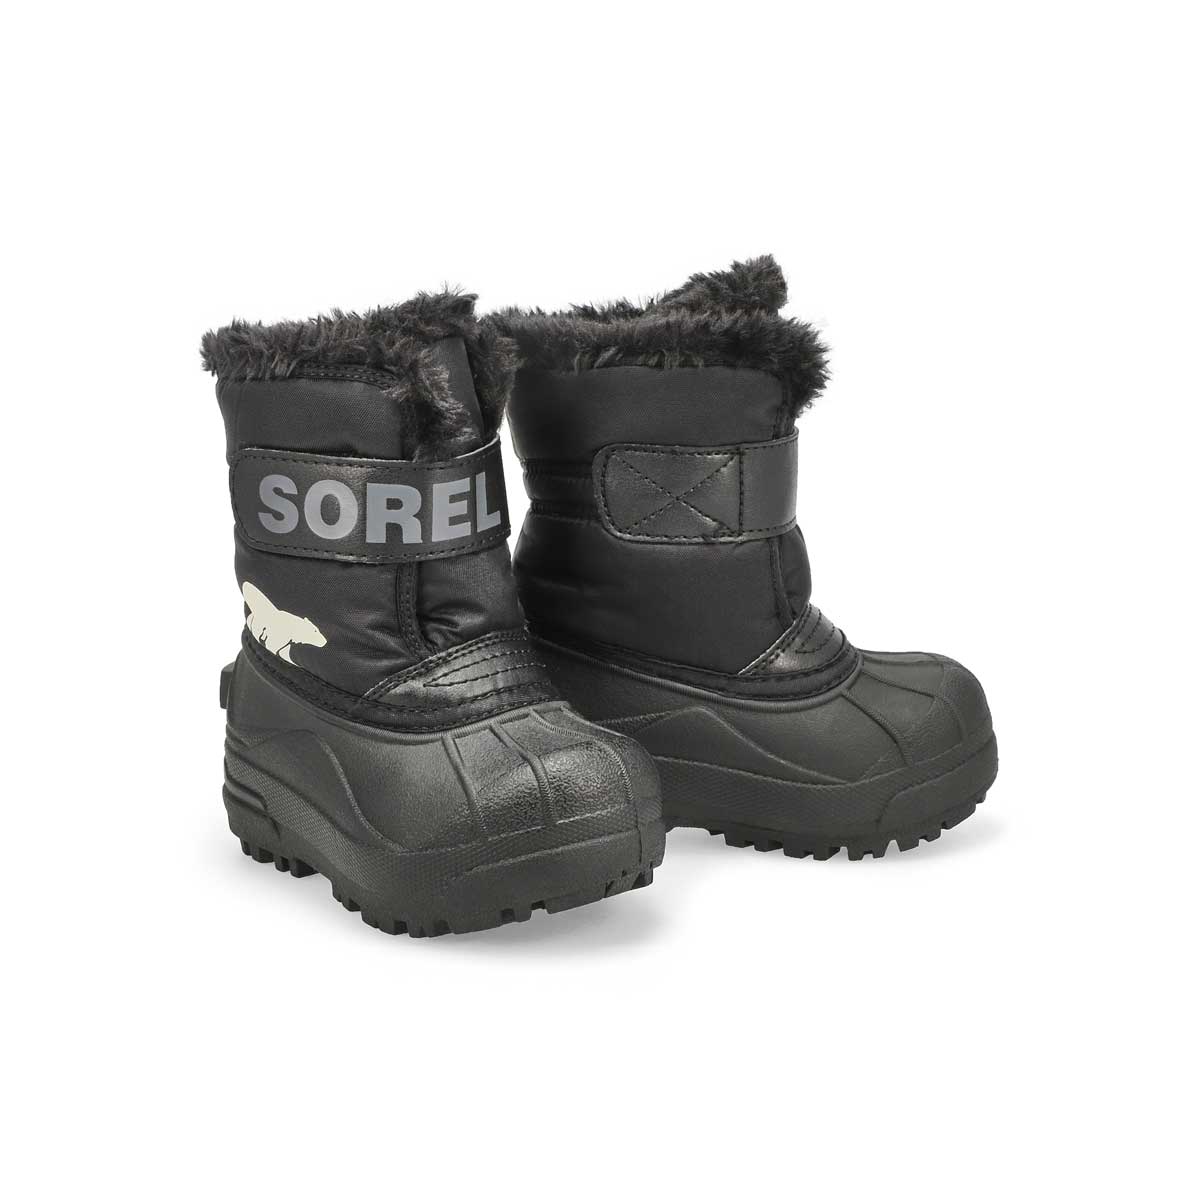 Infants' Snow Commander Boot - Black/Charcoal